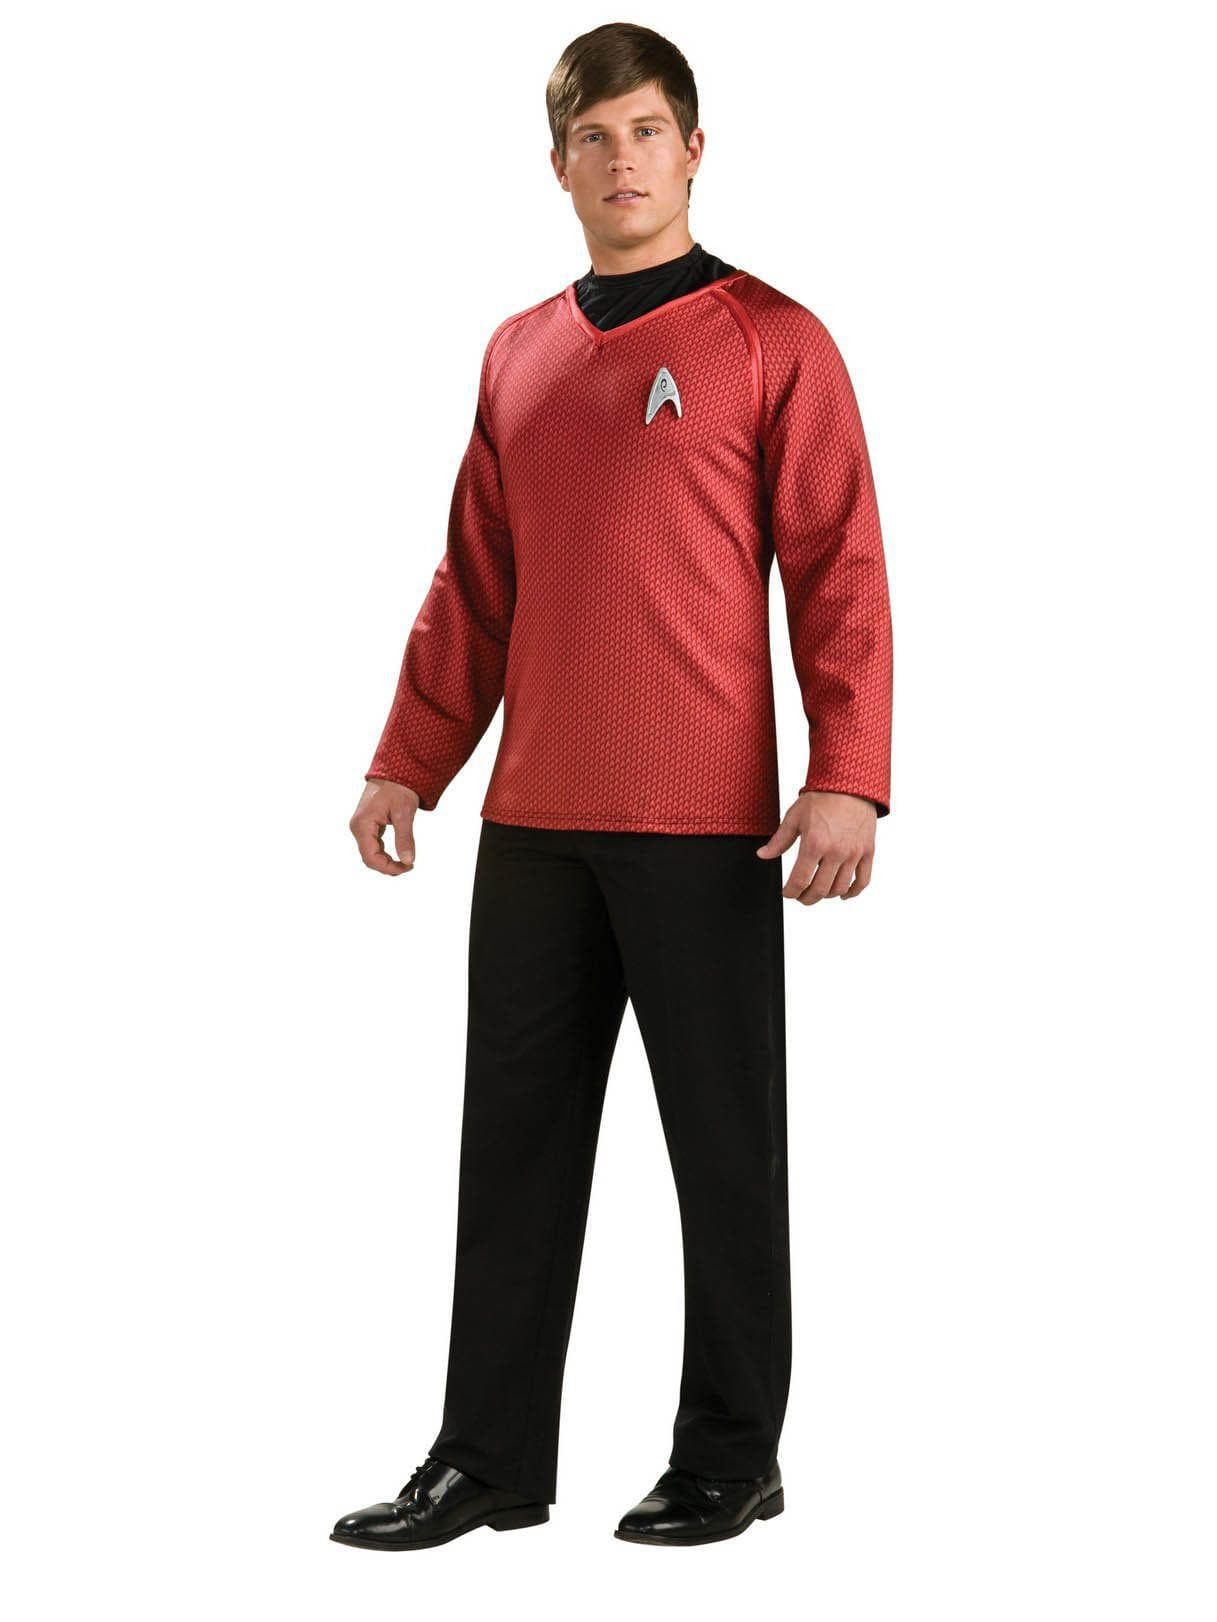 Adult Star Trek Scotty Costume - costumes.com